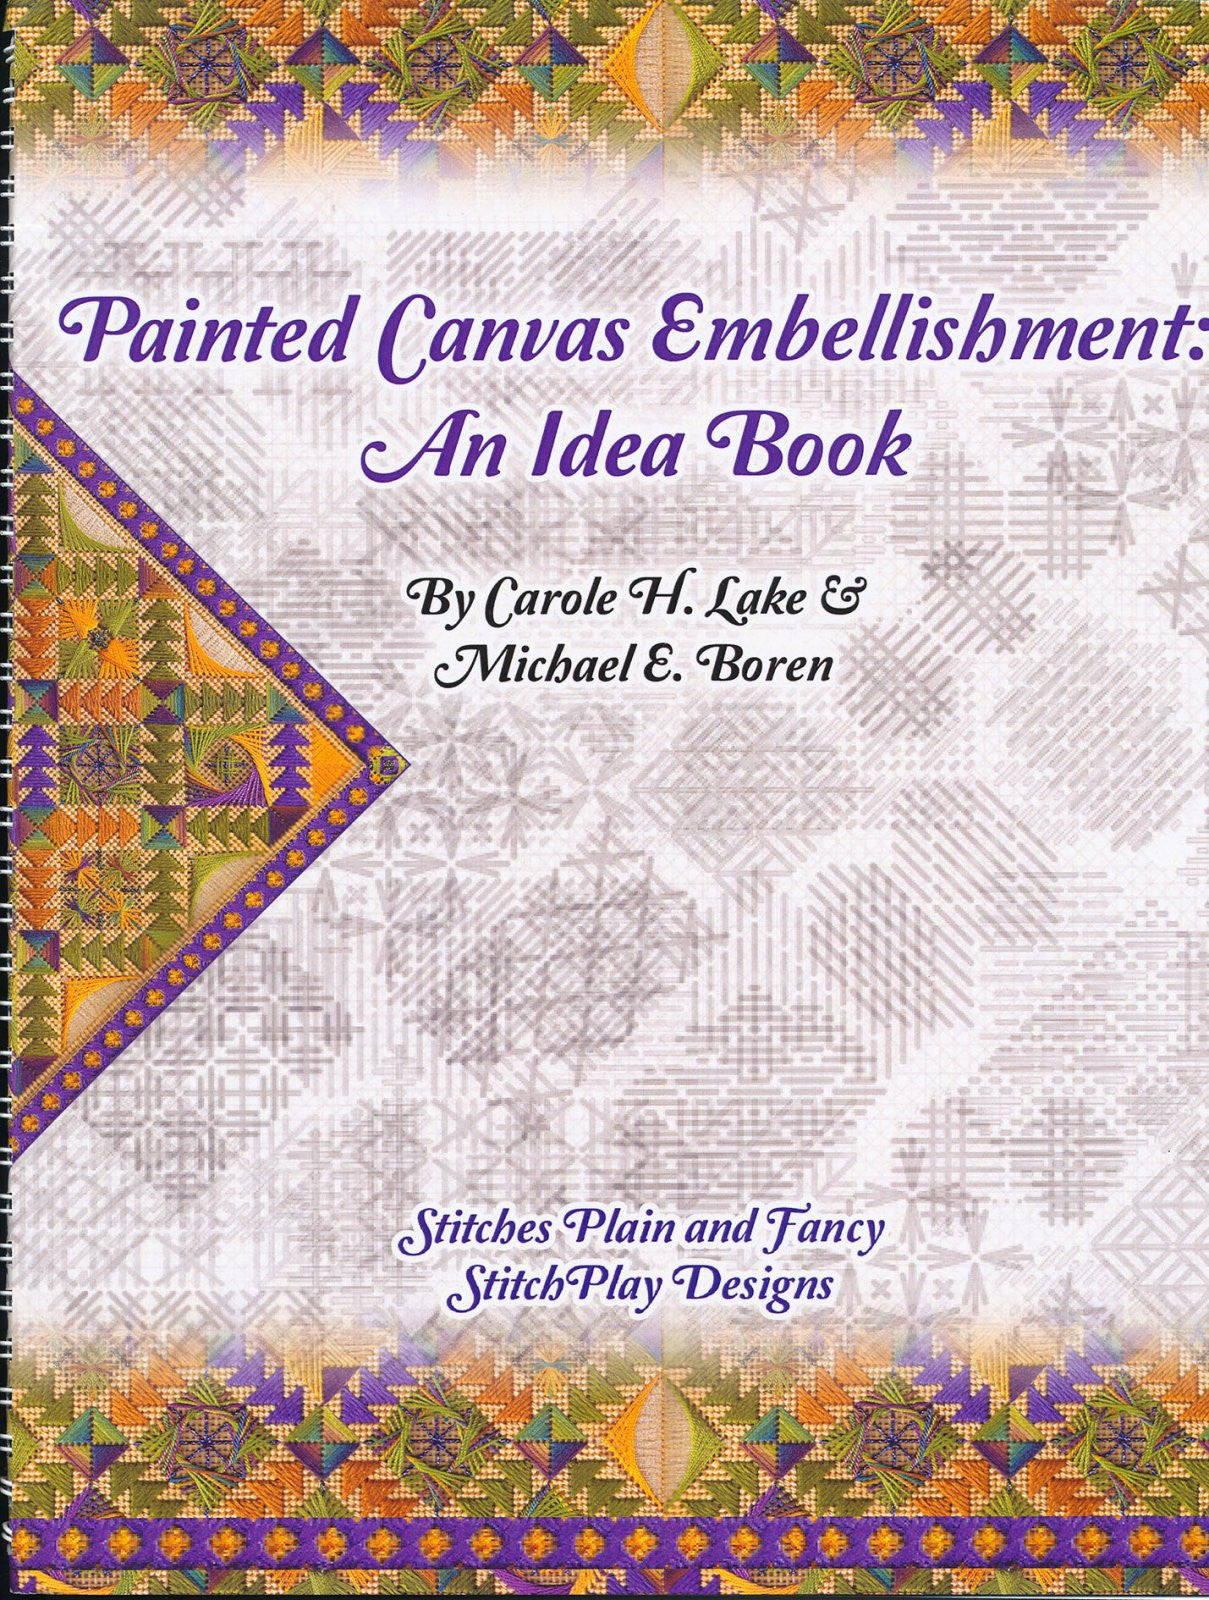 Book ~ "Painted Canvas Embellishment" ~ An Idea Book by Carole H. Lake & Michael E. Boren